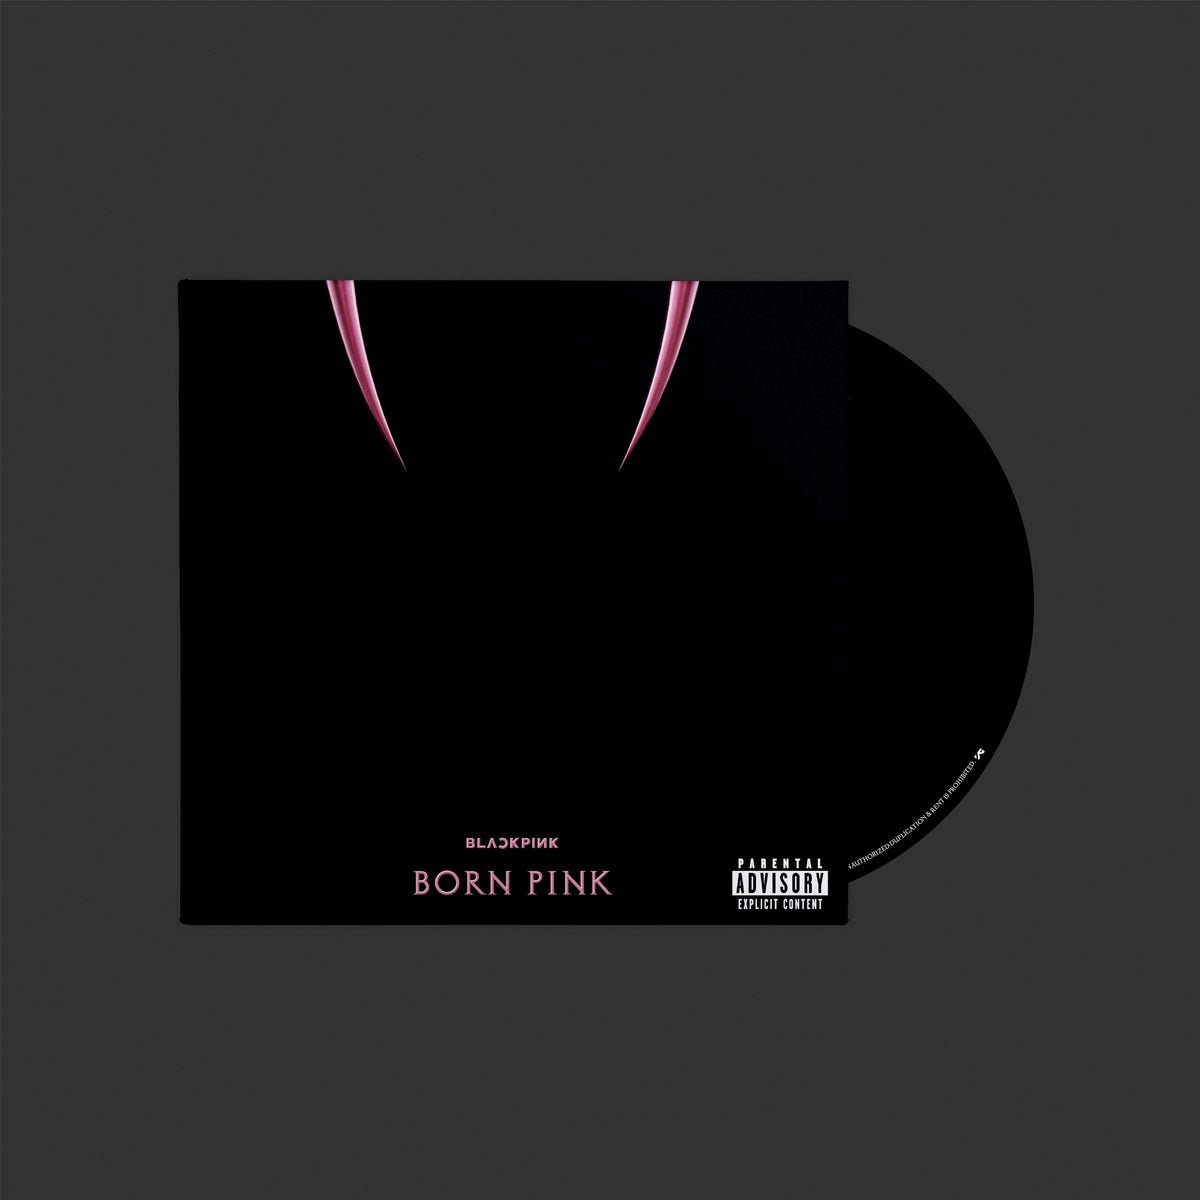 Борн Пинк альбом. Born Pink BLACKPINK альбом. CD стандарт. Альбом к поп Борн Пинк. Born pink альбом